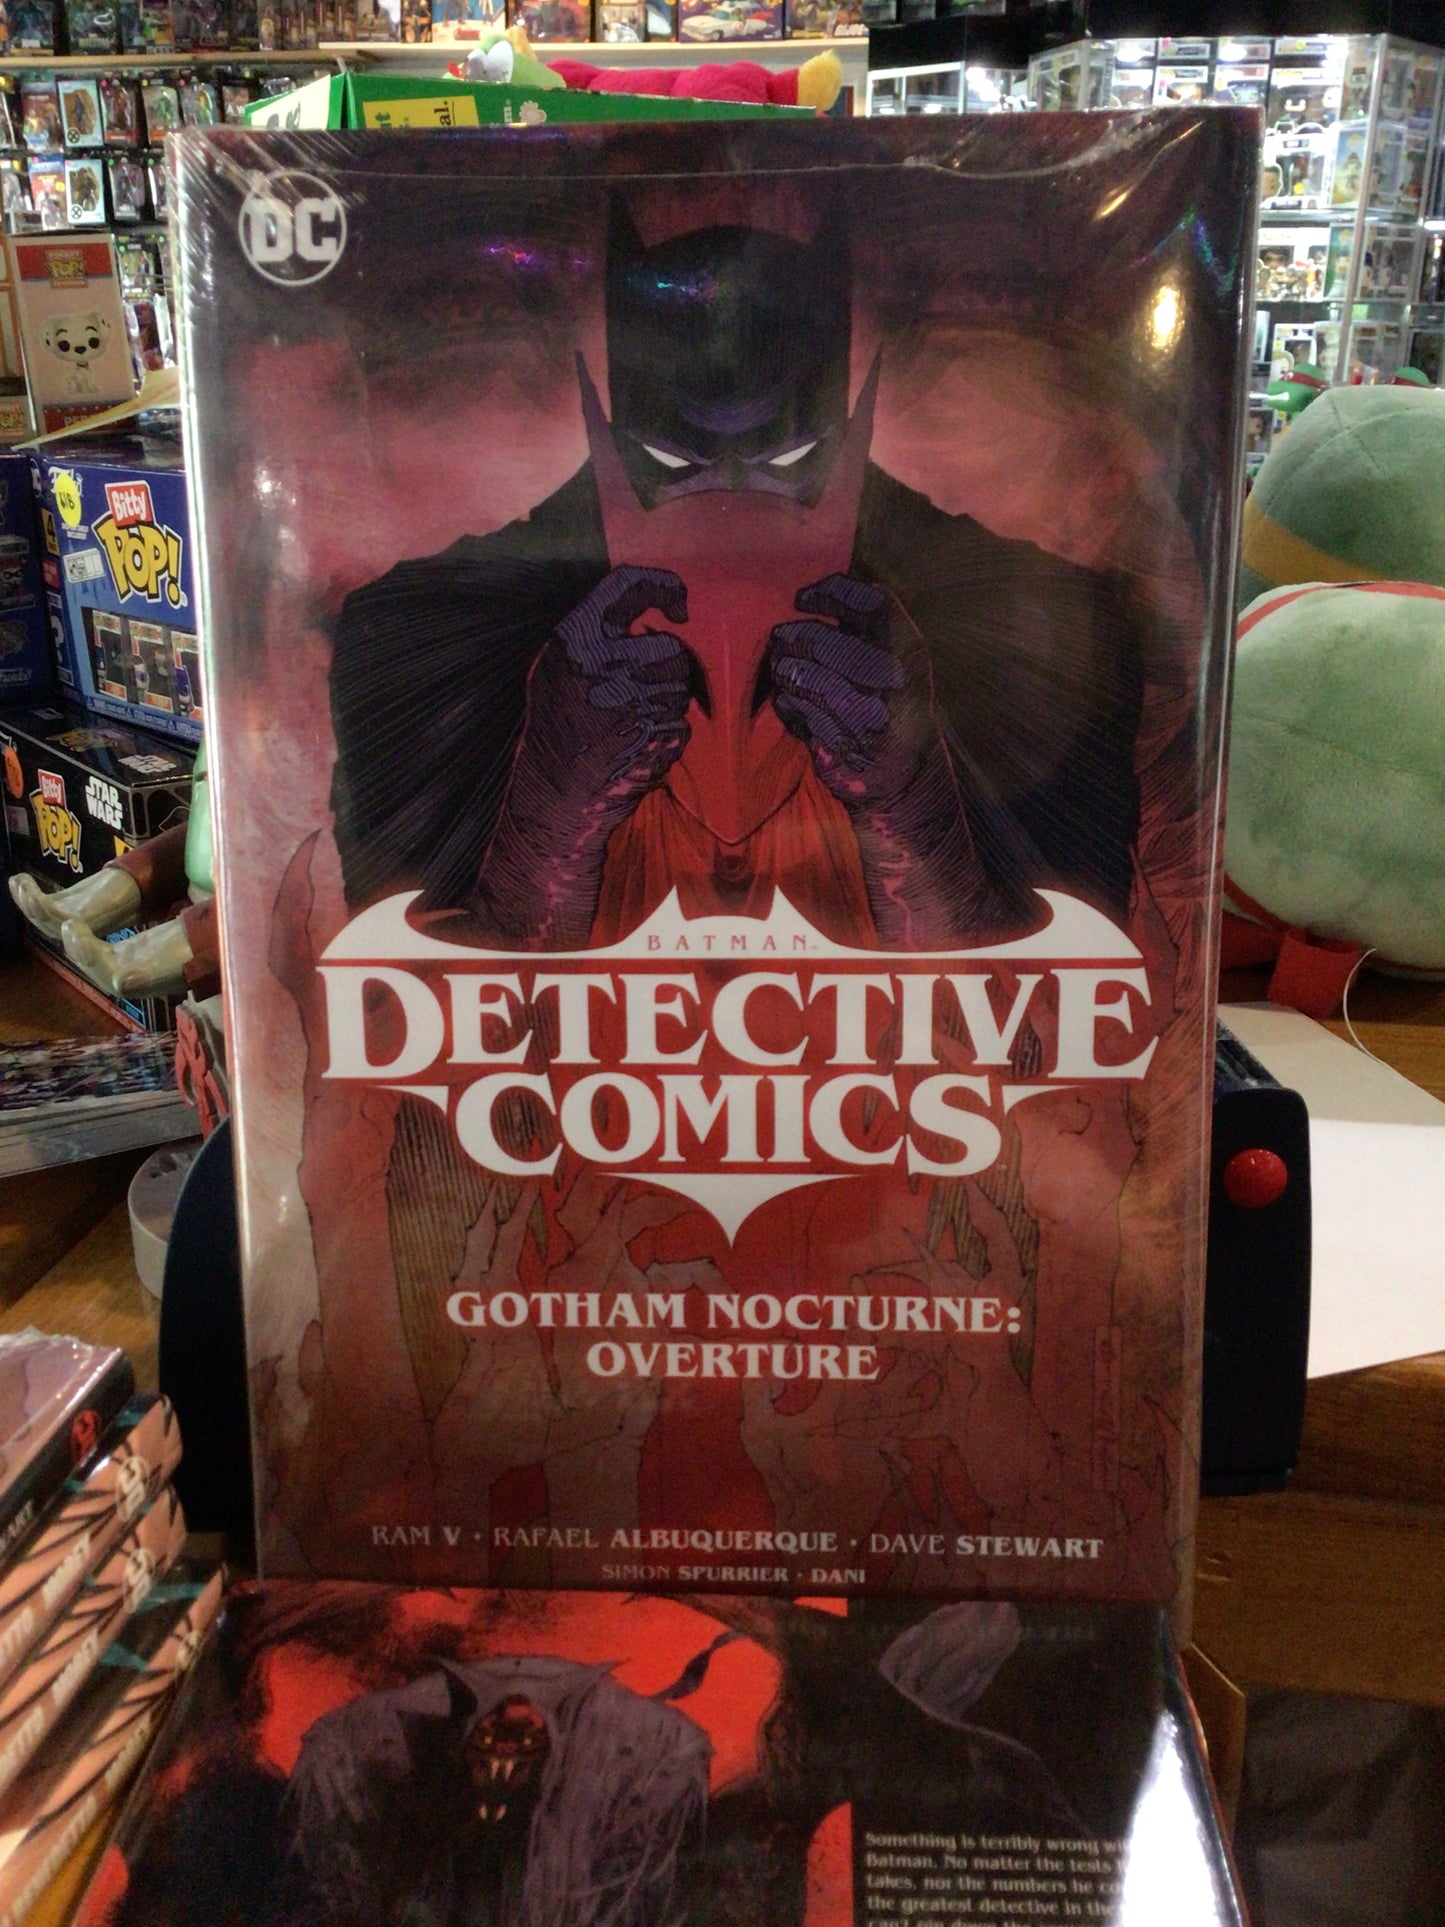 Batman: Detective Comics vol 1. Gotham Nocturne Overture by DC Comics